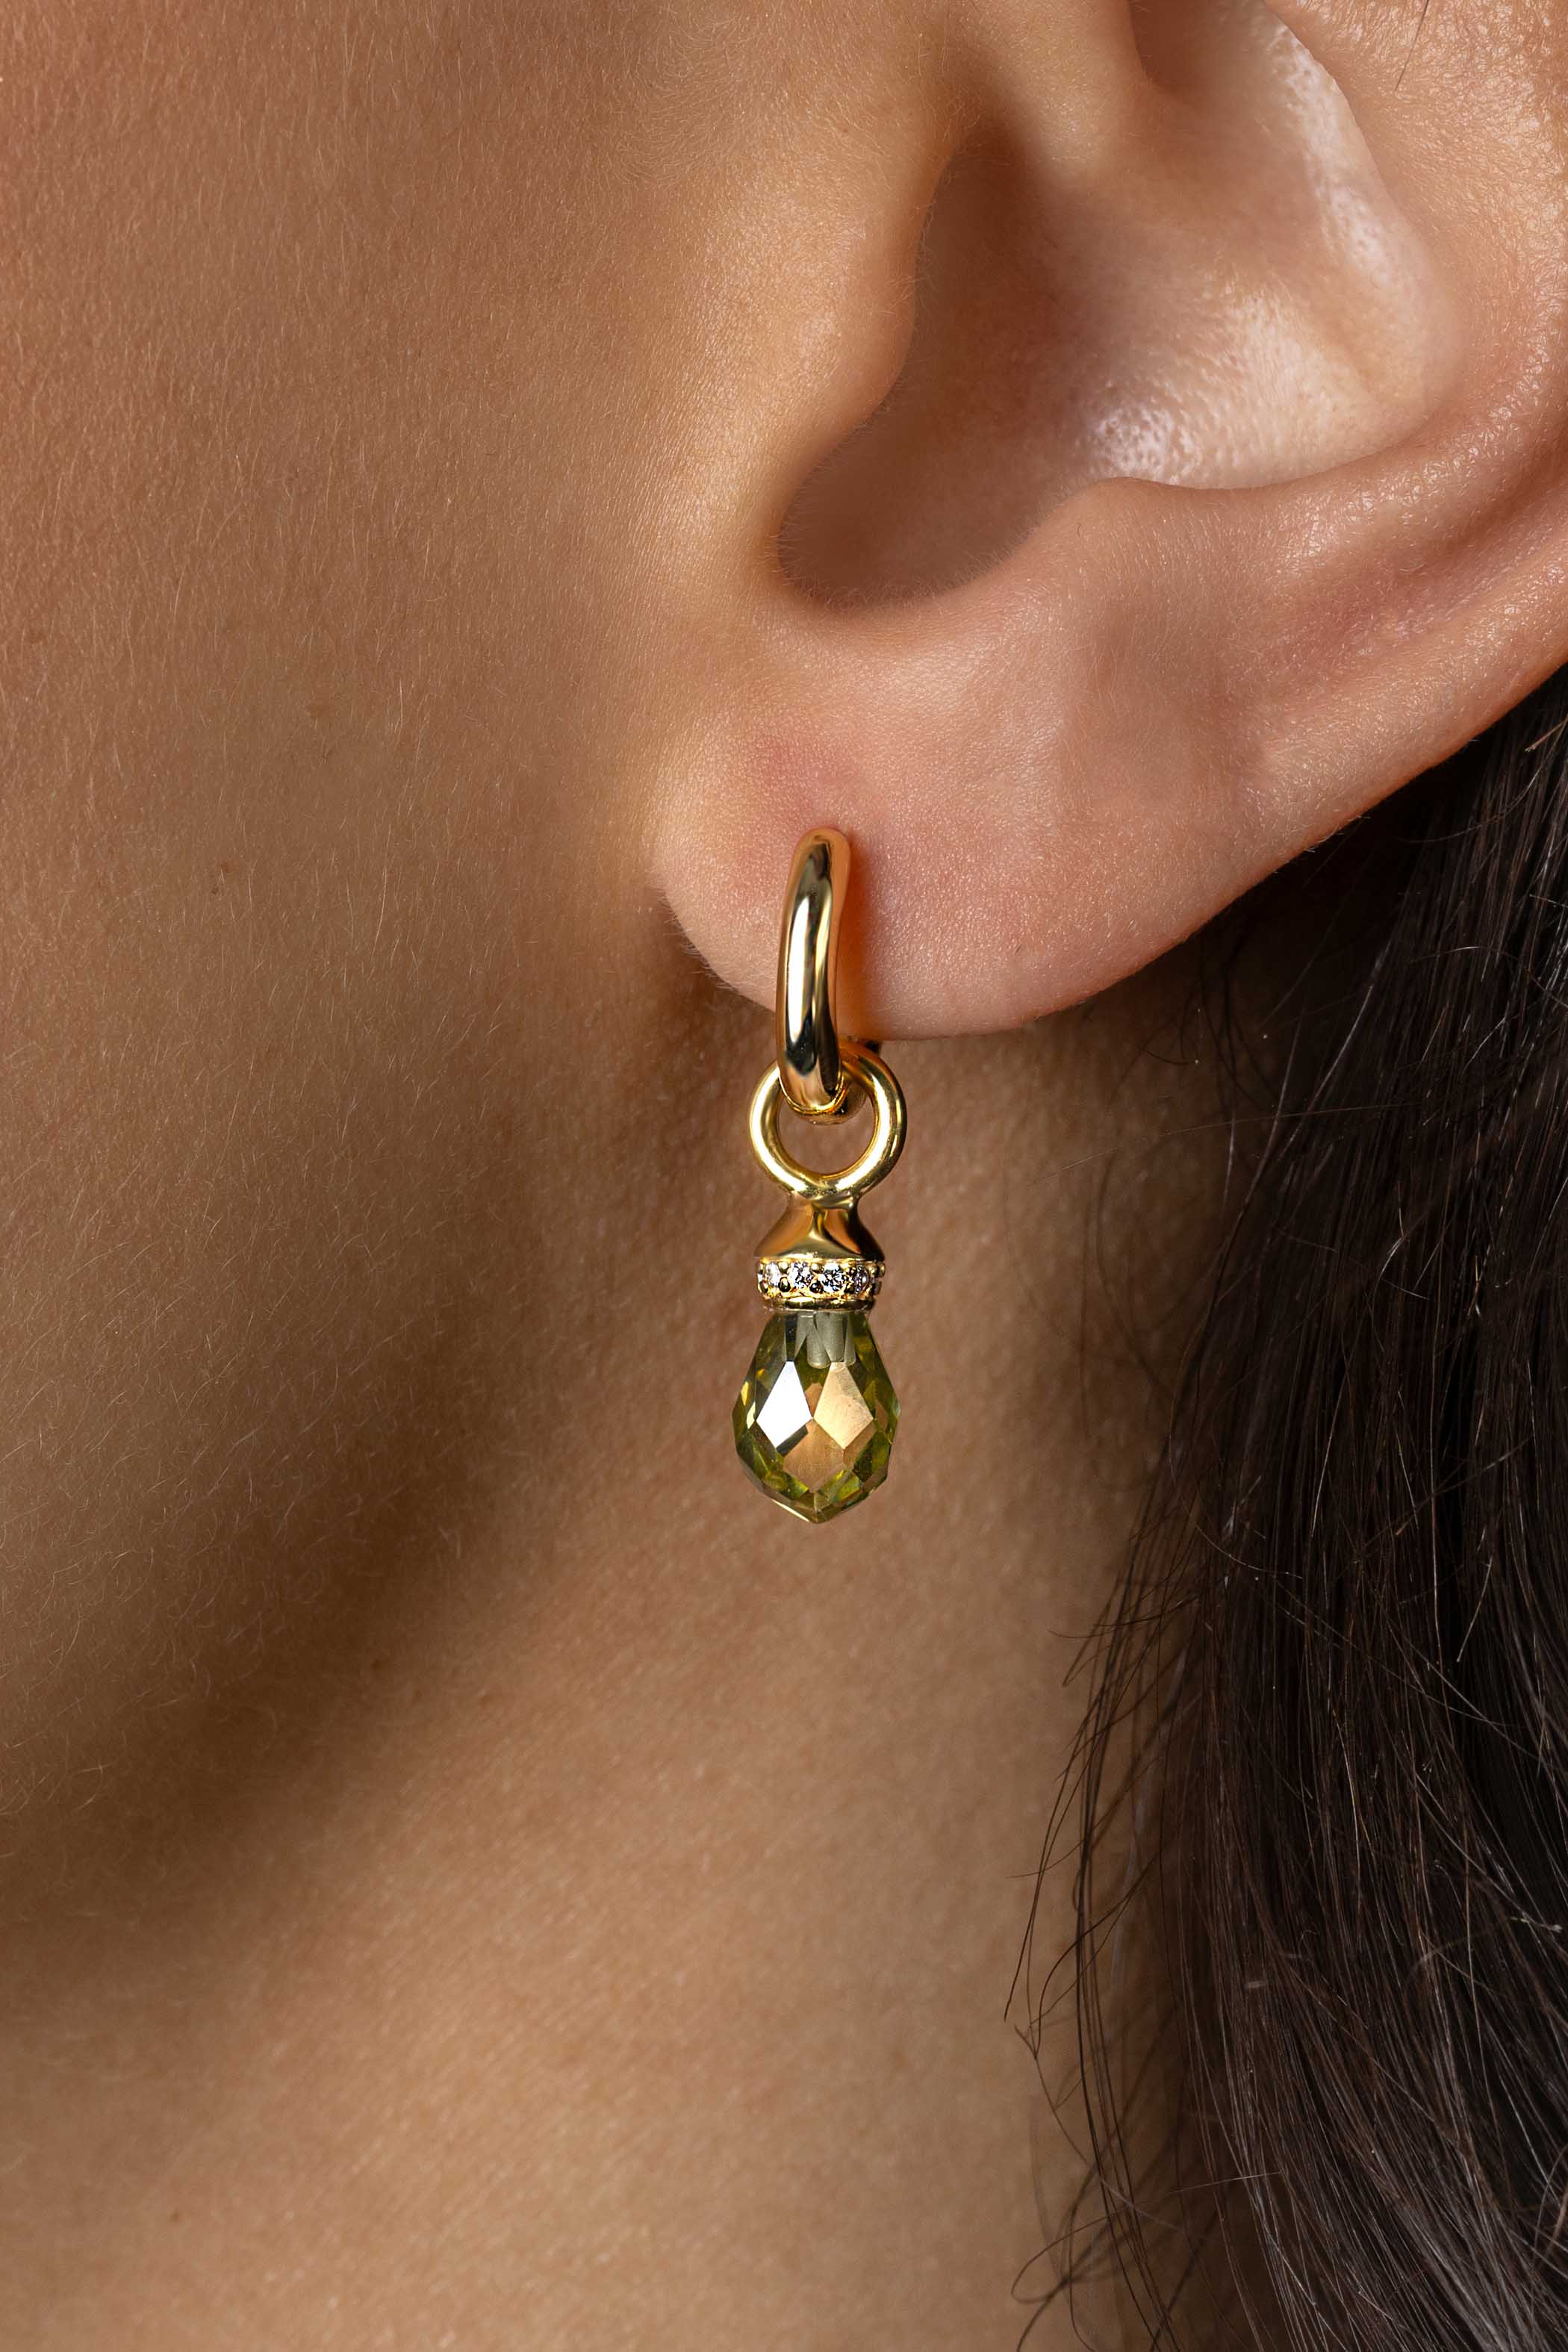 17mm ZINZI Gold Plated Sterling Silver Earrings Pendants in Pear-shape Green Peridot and White Zirconias ZICH2429 (excl. hoop earrings)